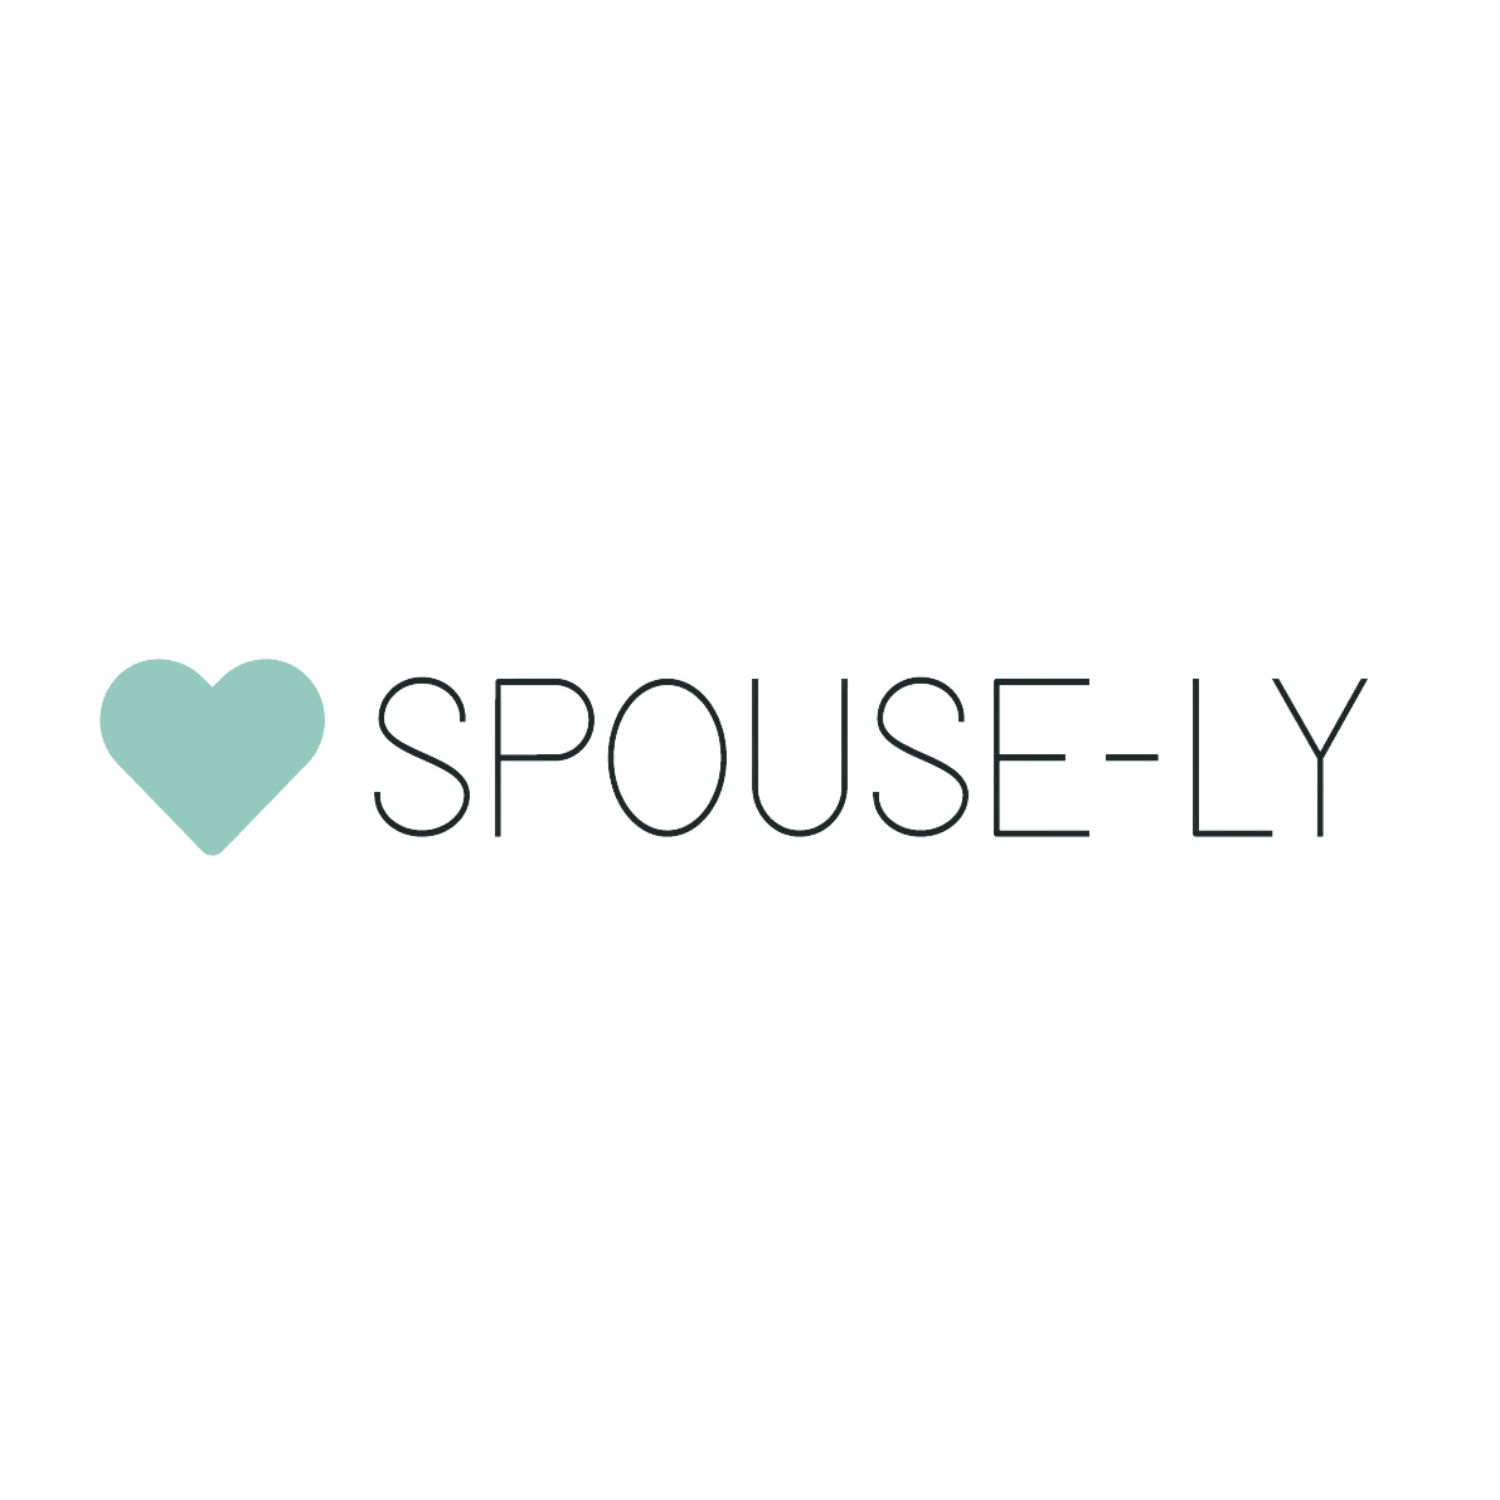 Spouse-ly Logo ecommerce